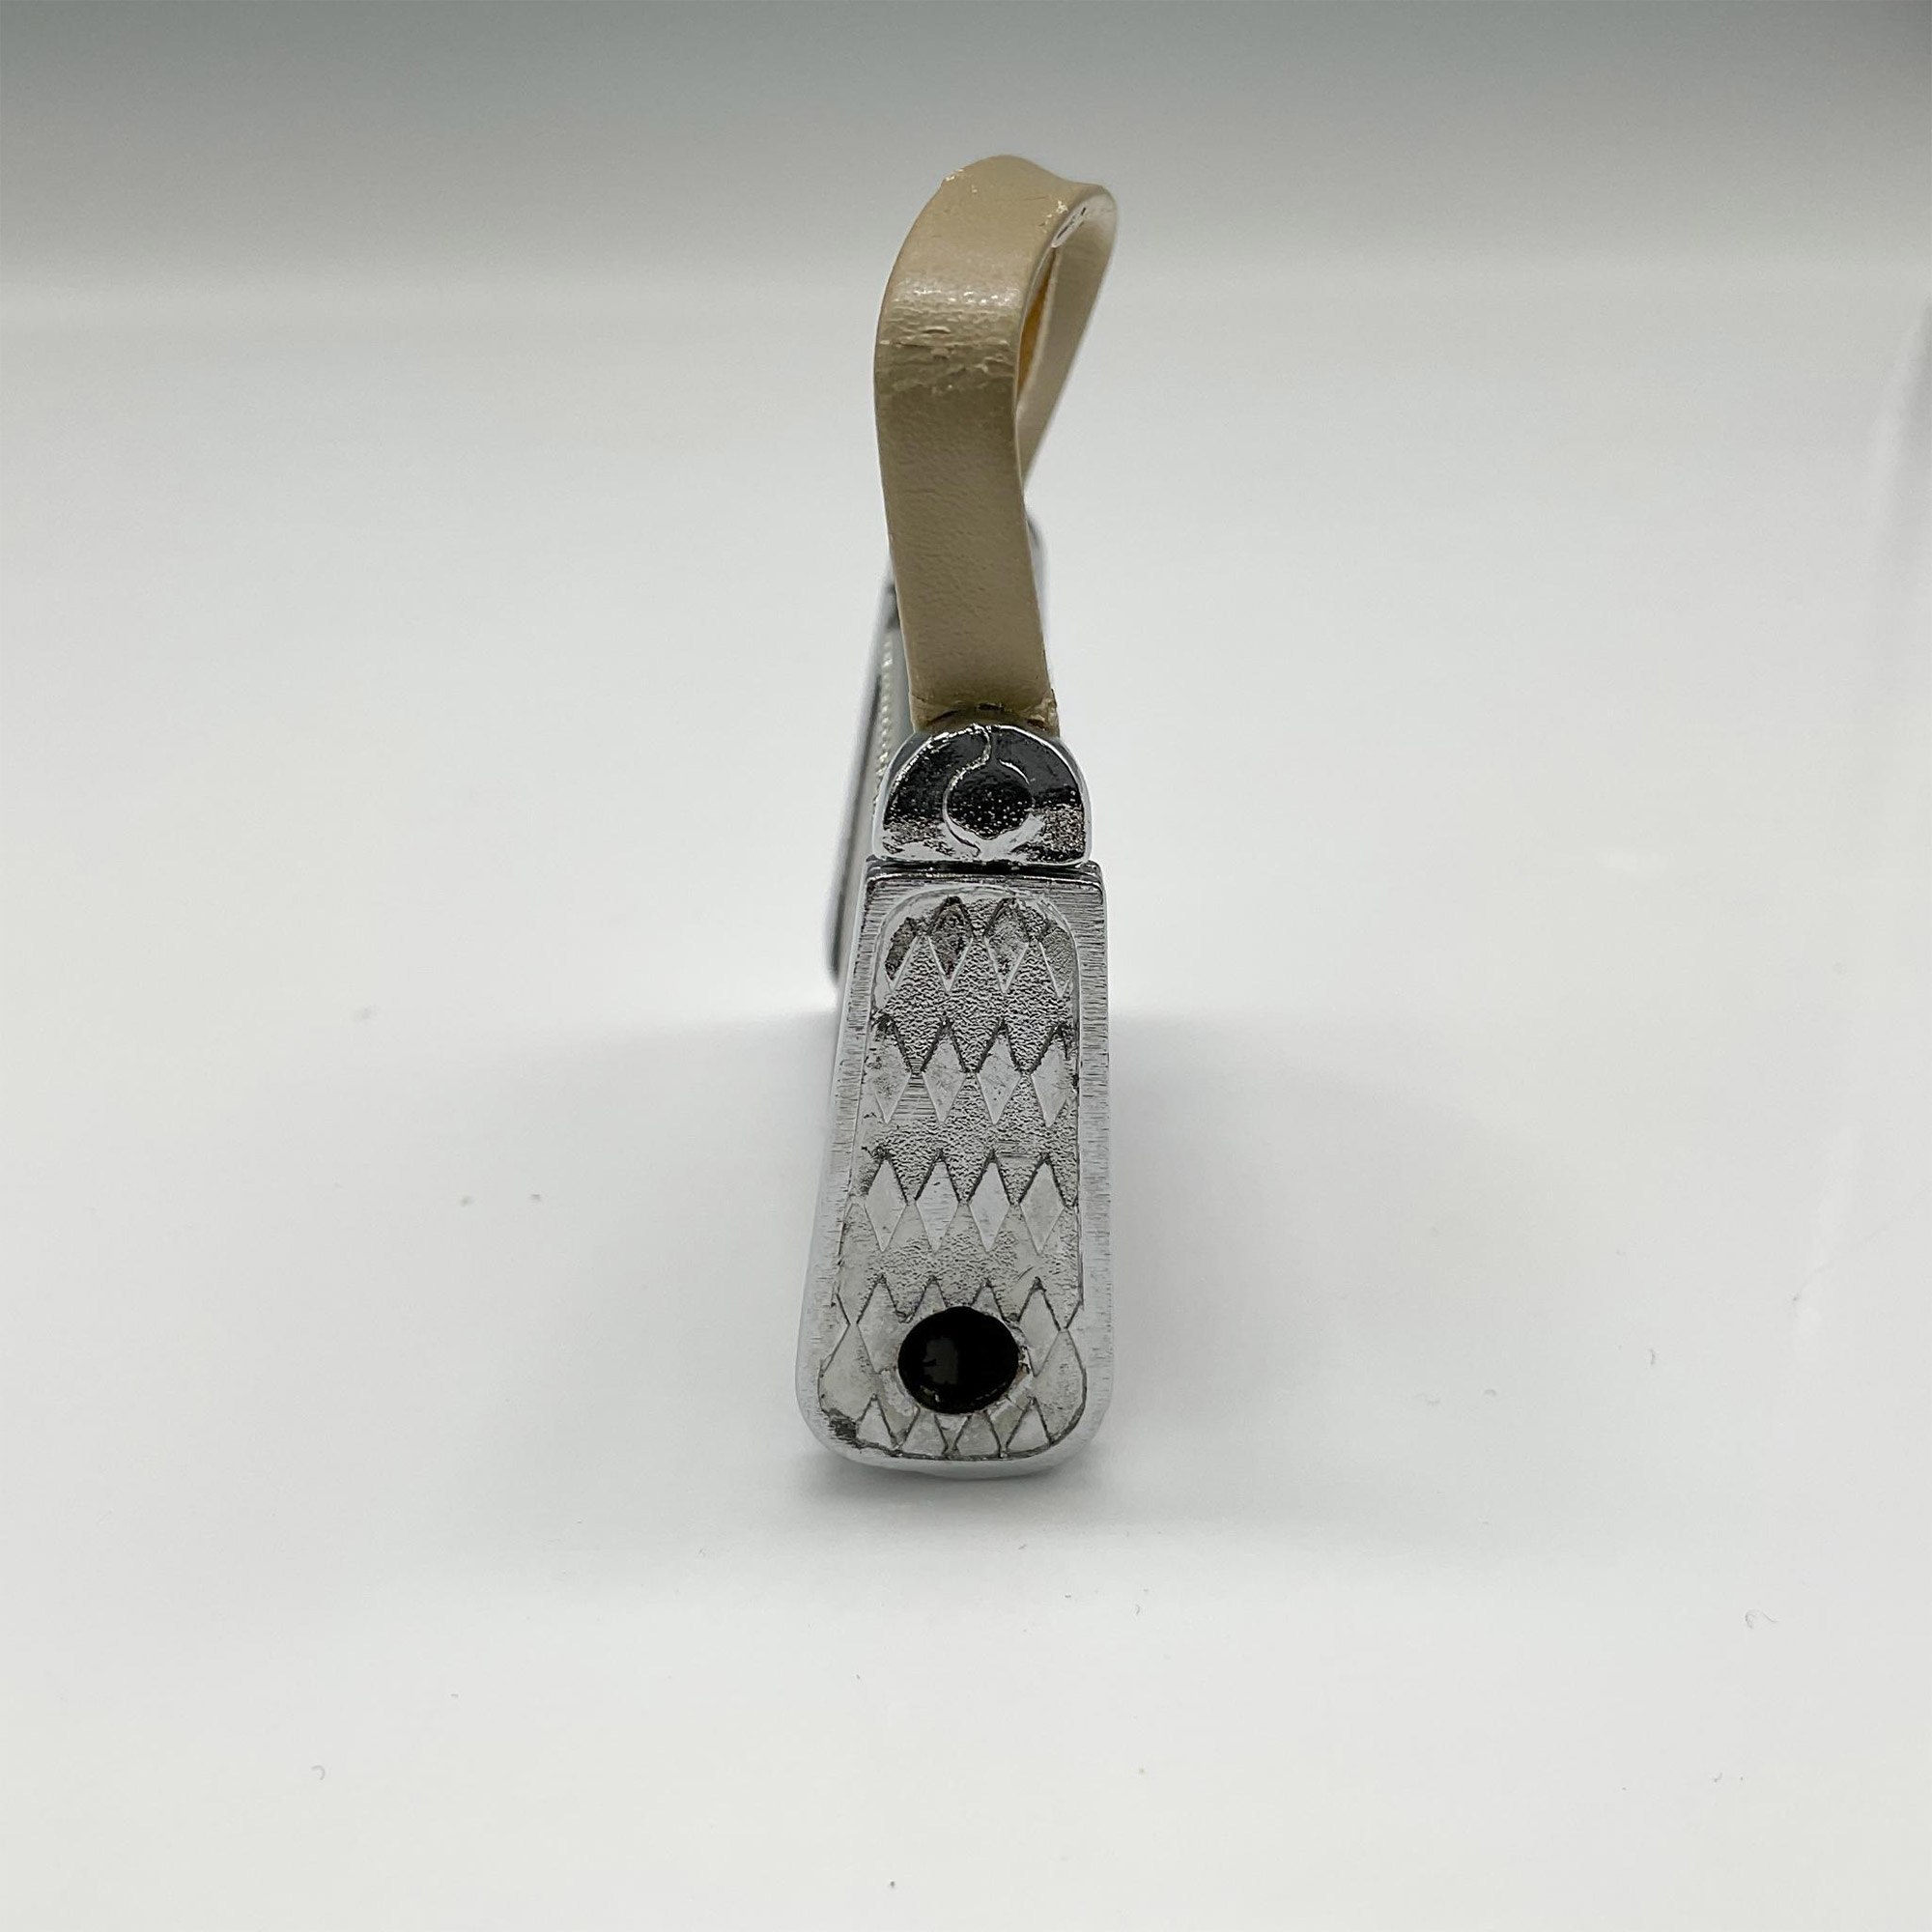 Louis Vuitton Style Miniature Lighter, Purse - Image 3 of 4